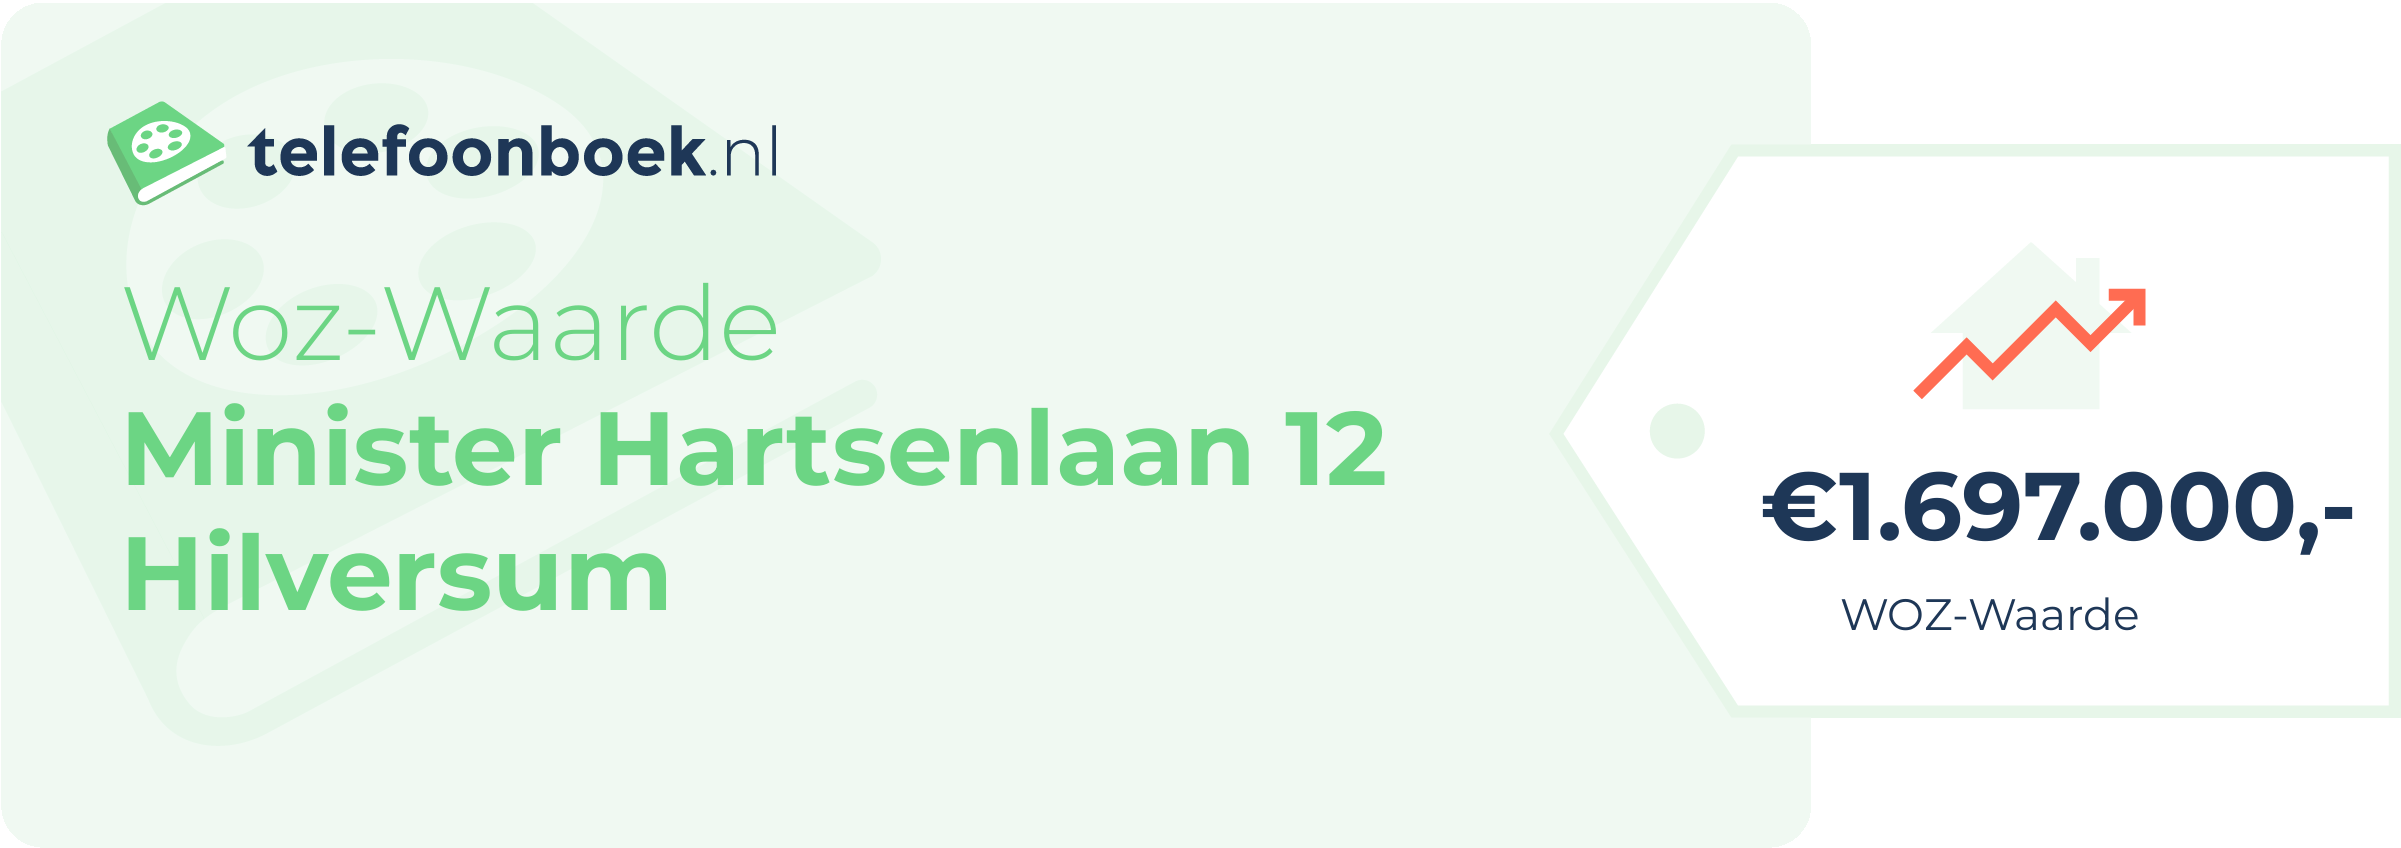 WOZ-waarde Minister Hartsenlaan 12 Hilversum